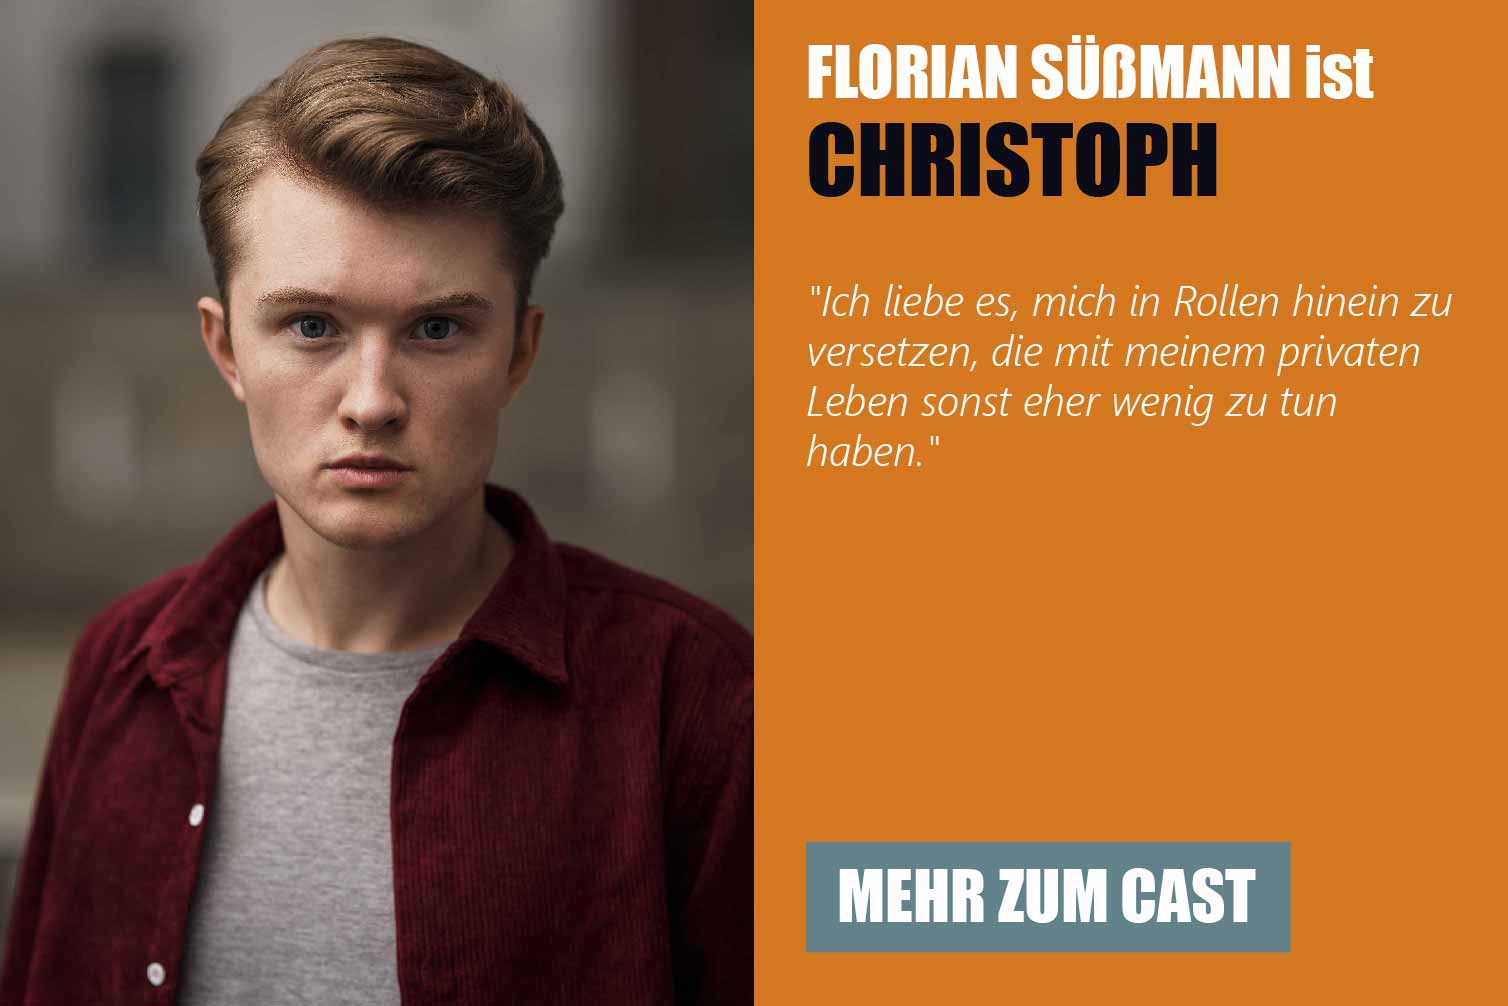 Der Schauspieler Florian Süßmann ist Christoph